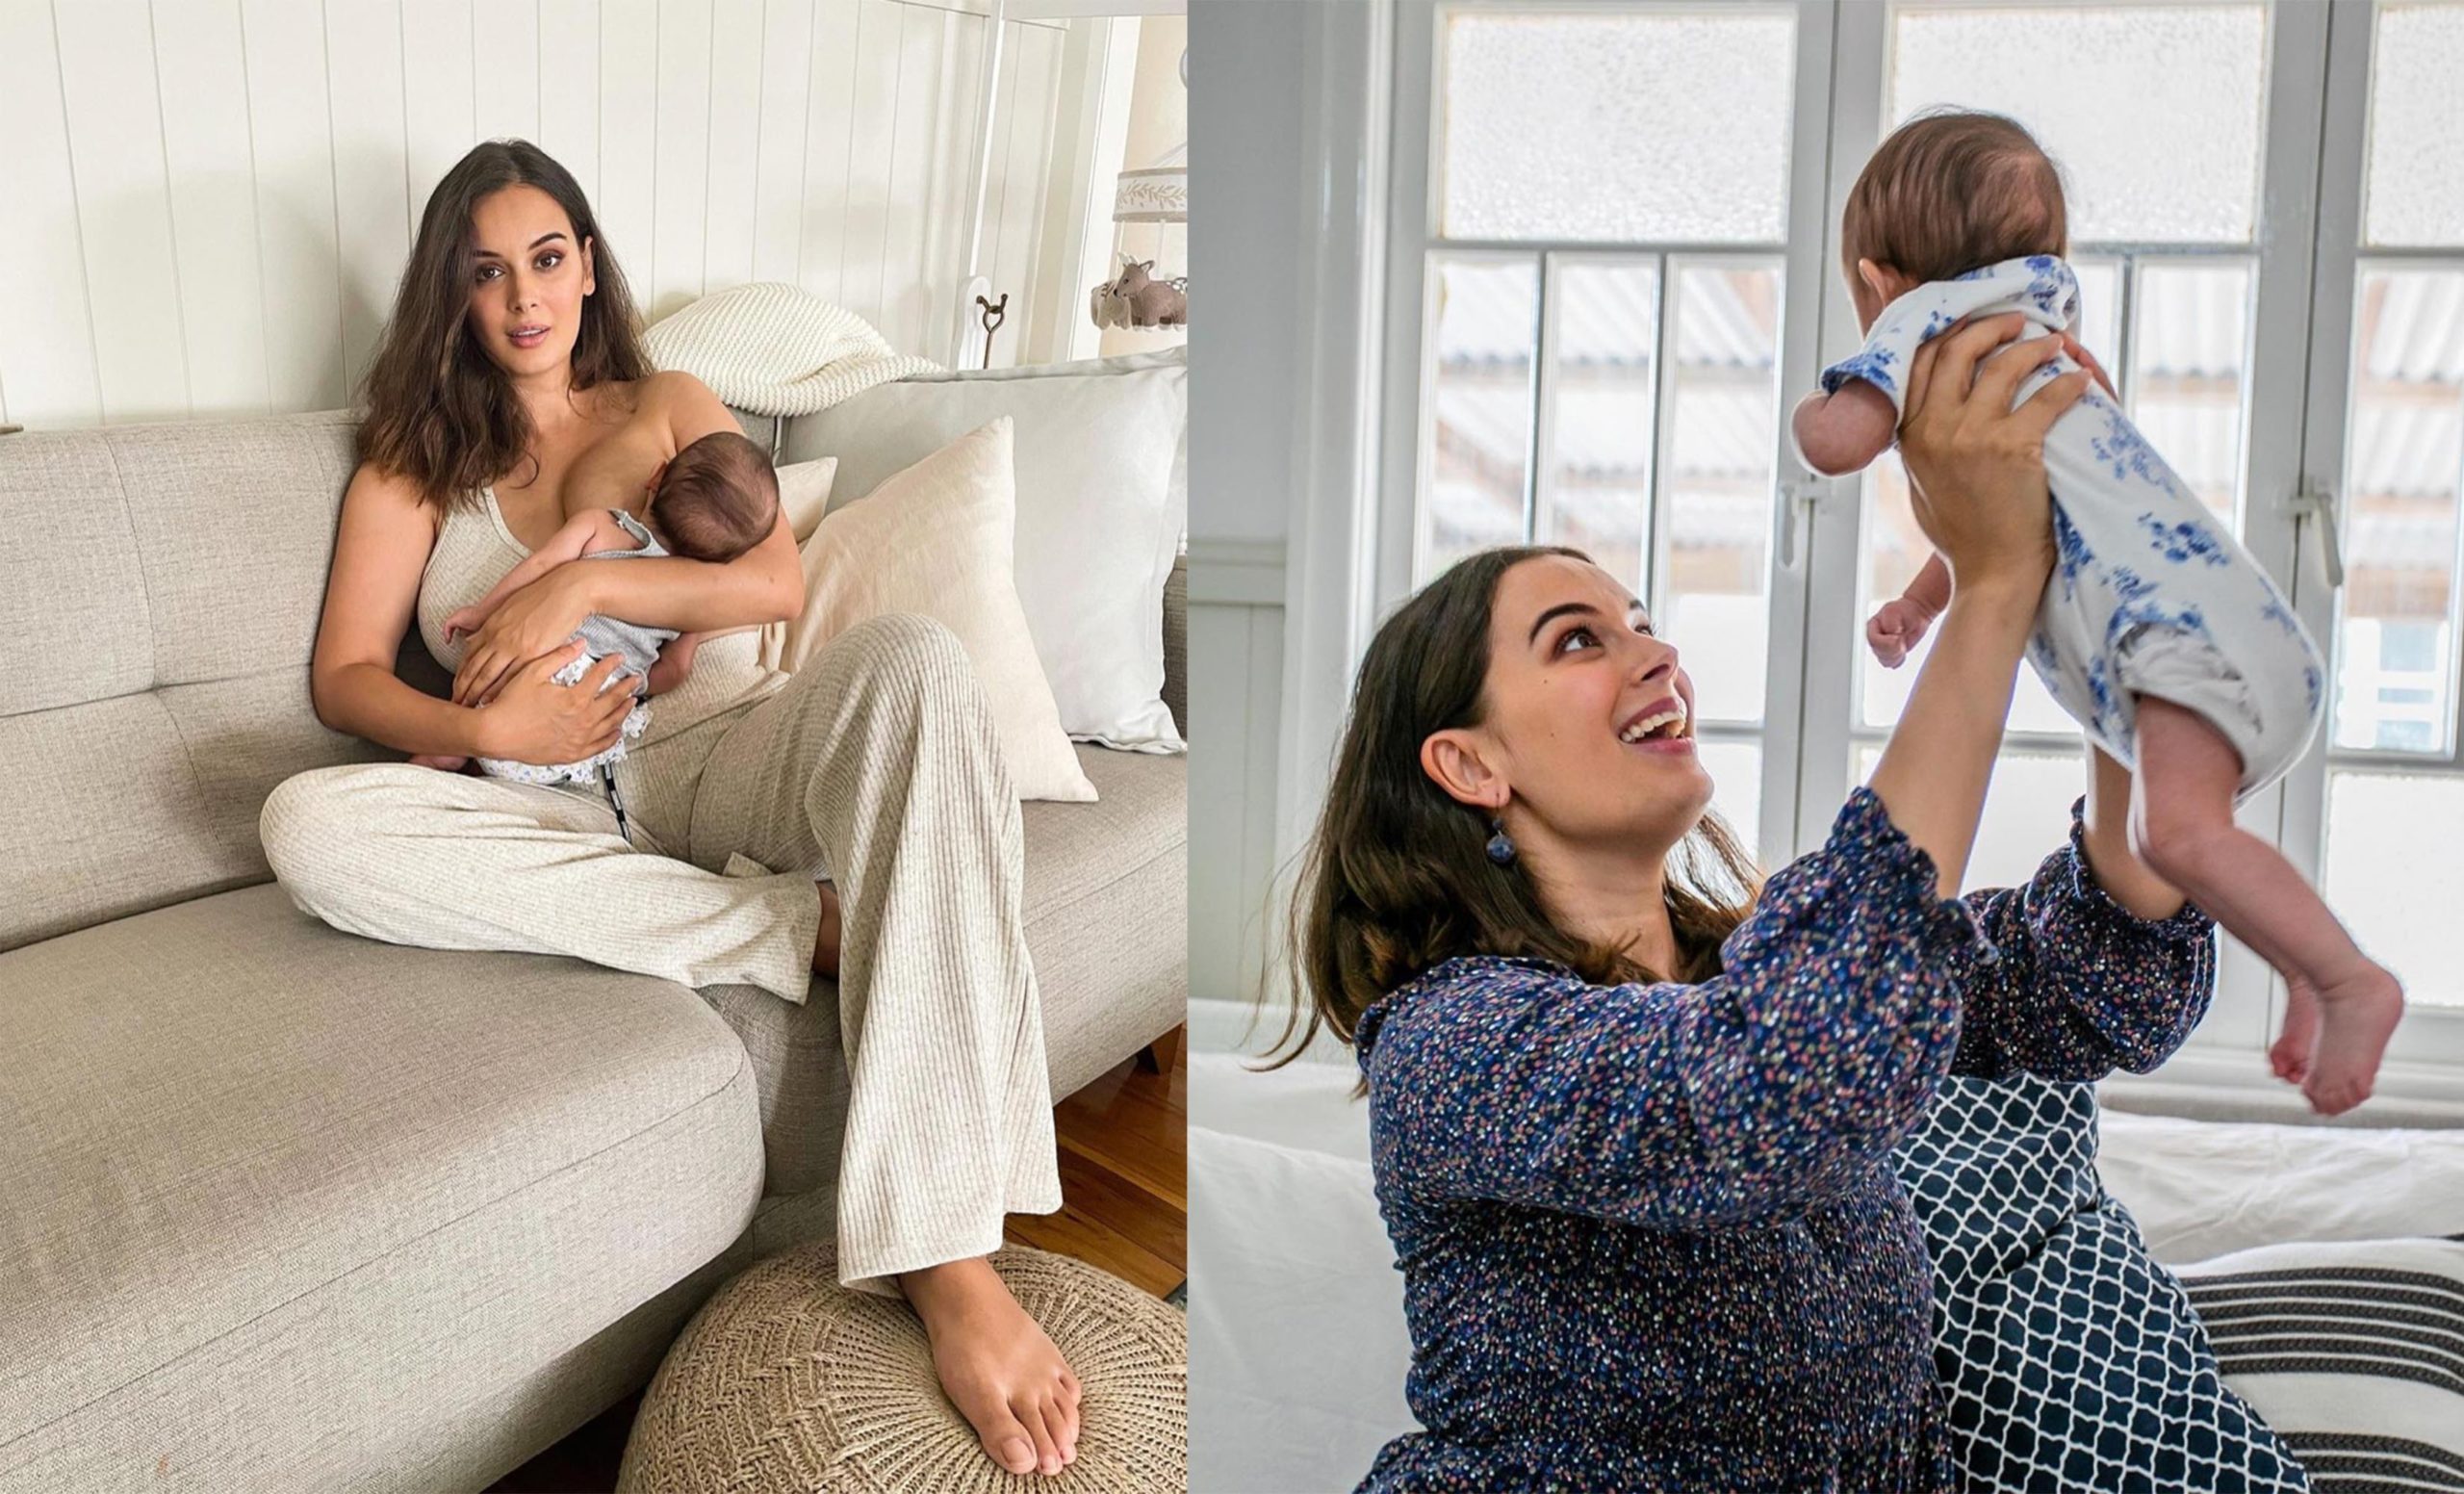 Evelyn Sharma Sex - Evelyn Sharma Posts Another Breastfeeding Pic To Shut Trolls